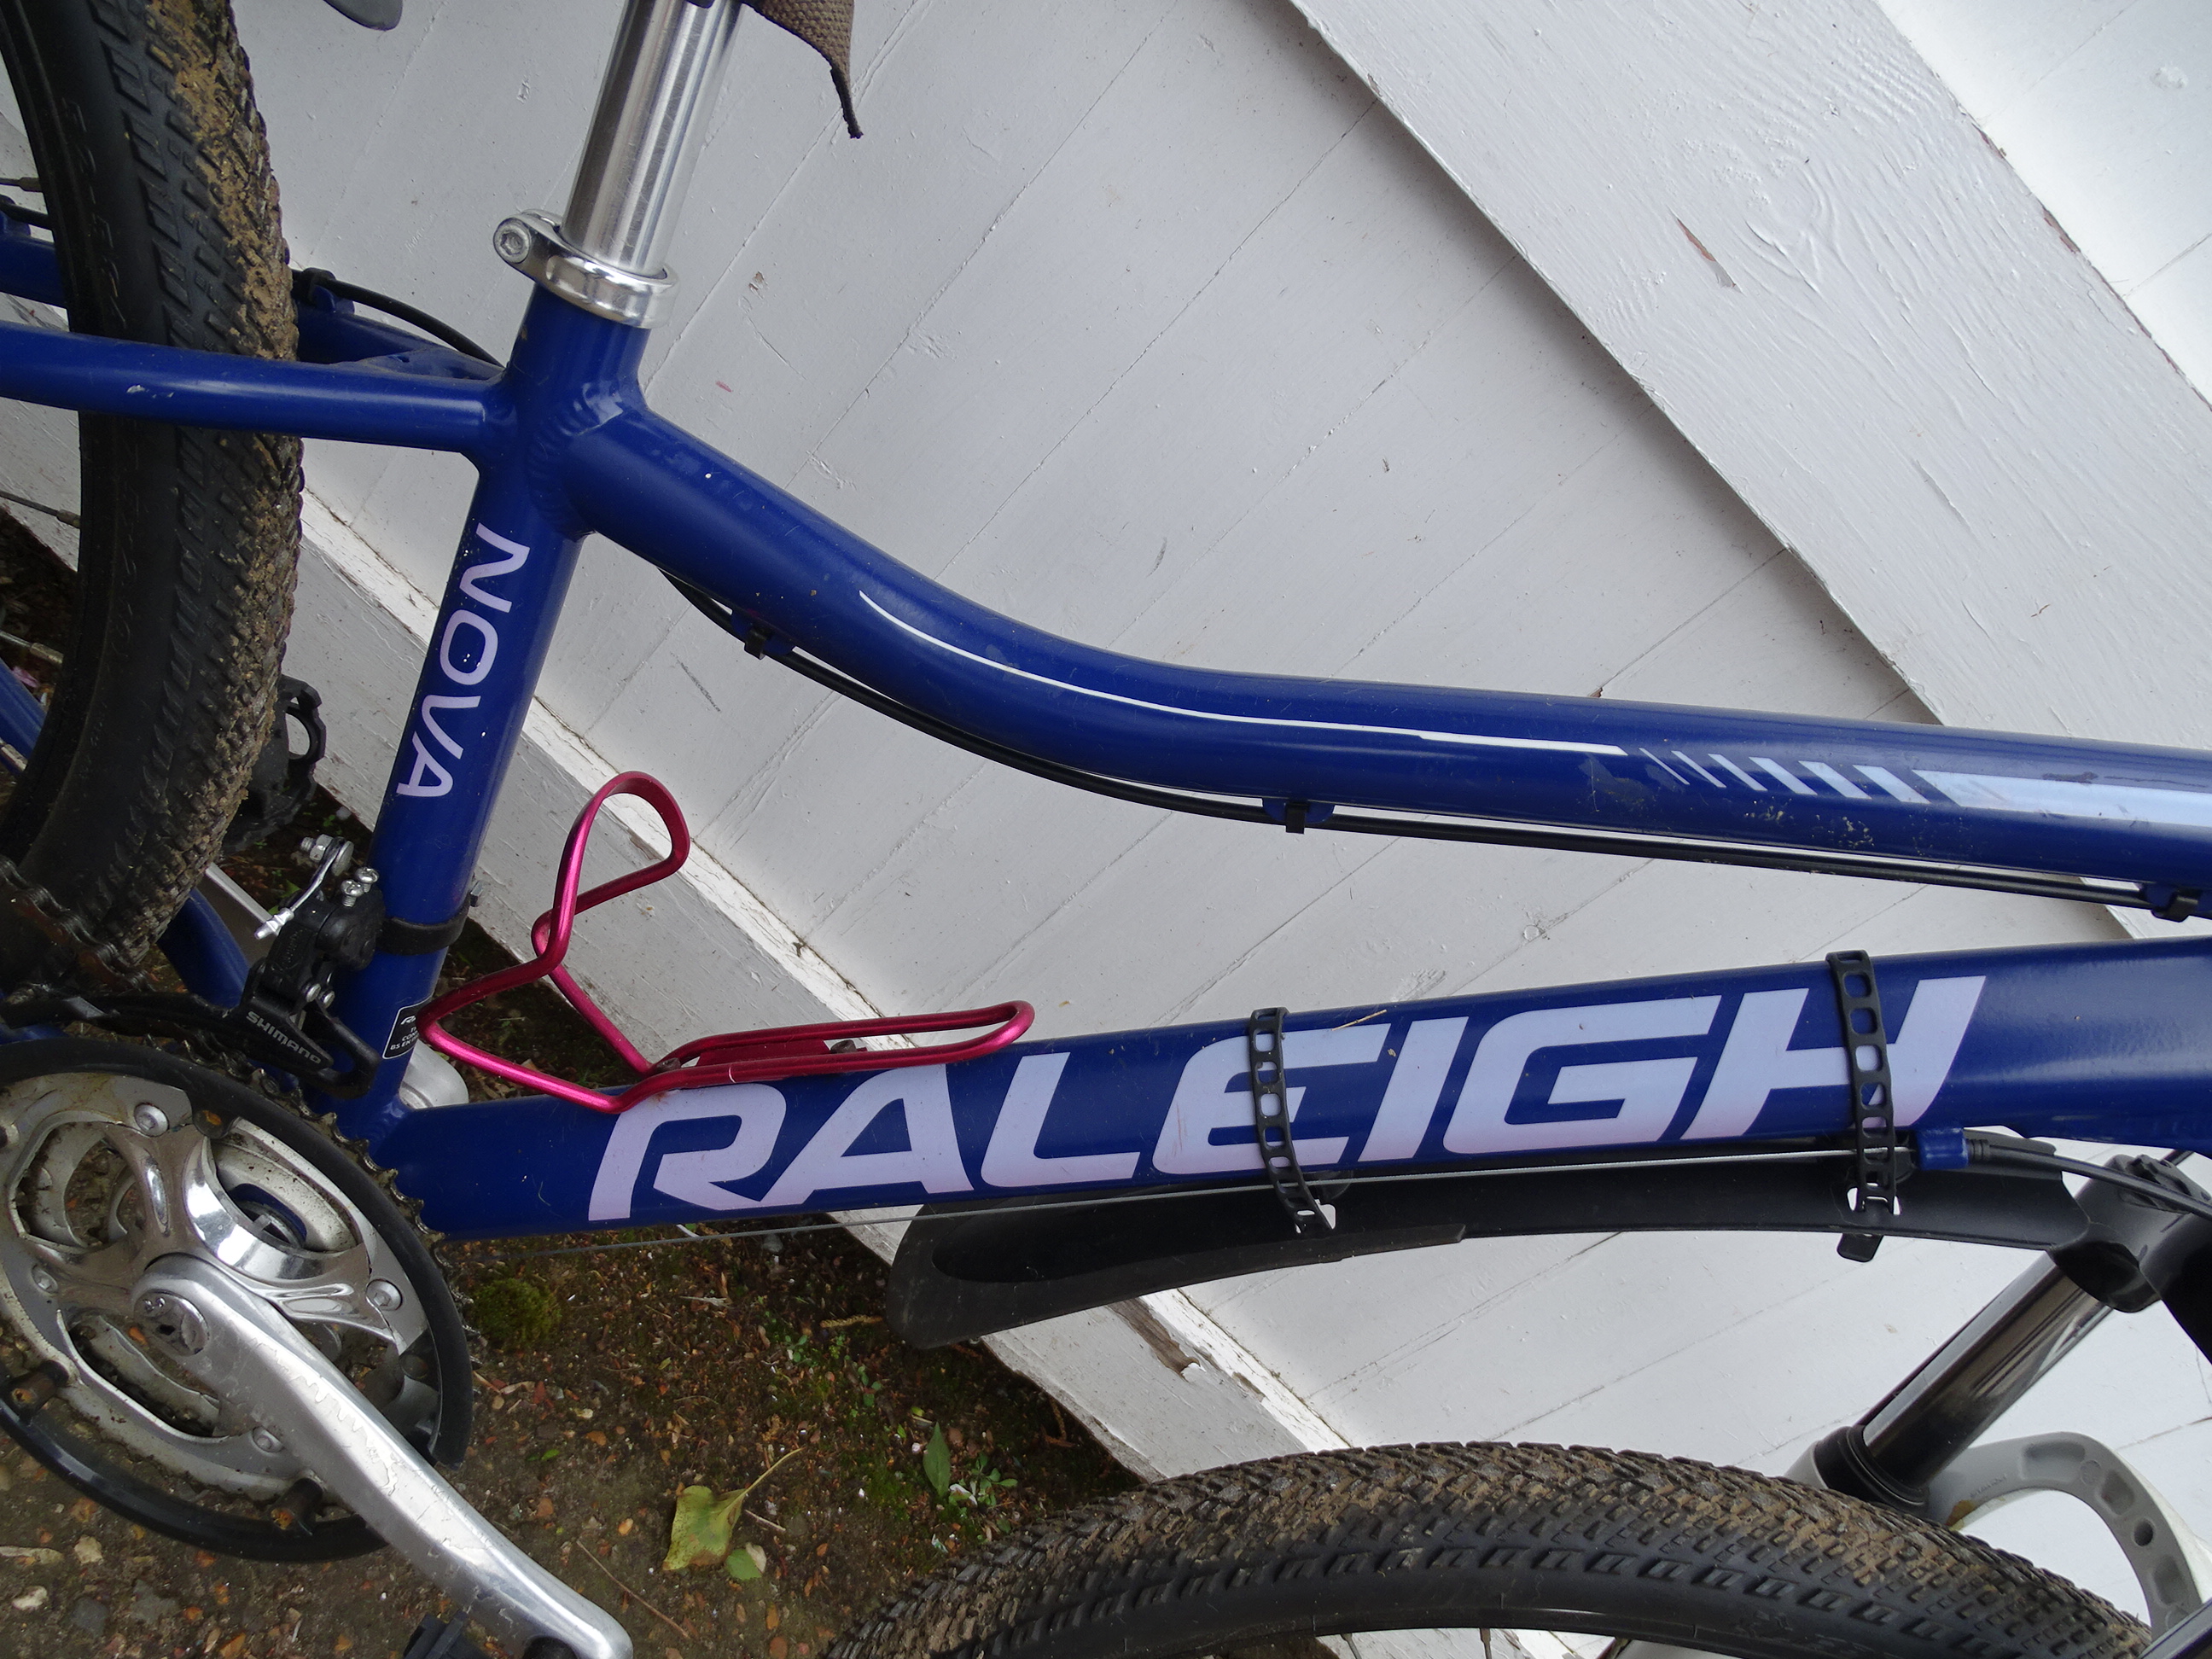 Raleigh ladies mountain bike - Bild 2 aus 2